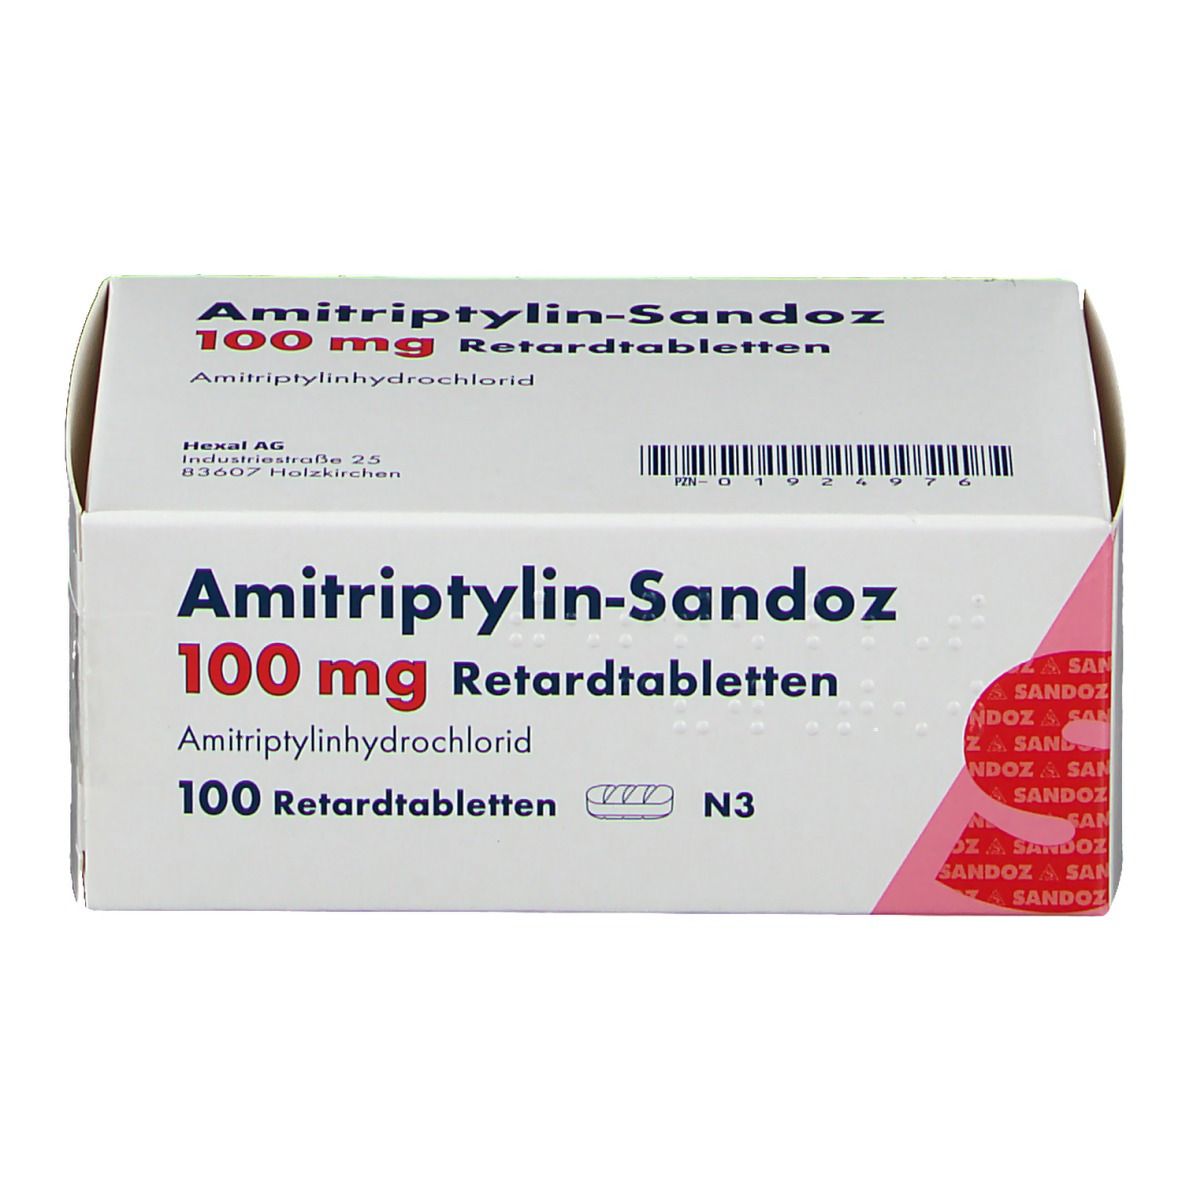 AMITRIPTYLIN Sandoz 100 mg Retardtabletten